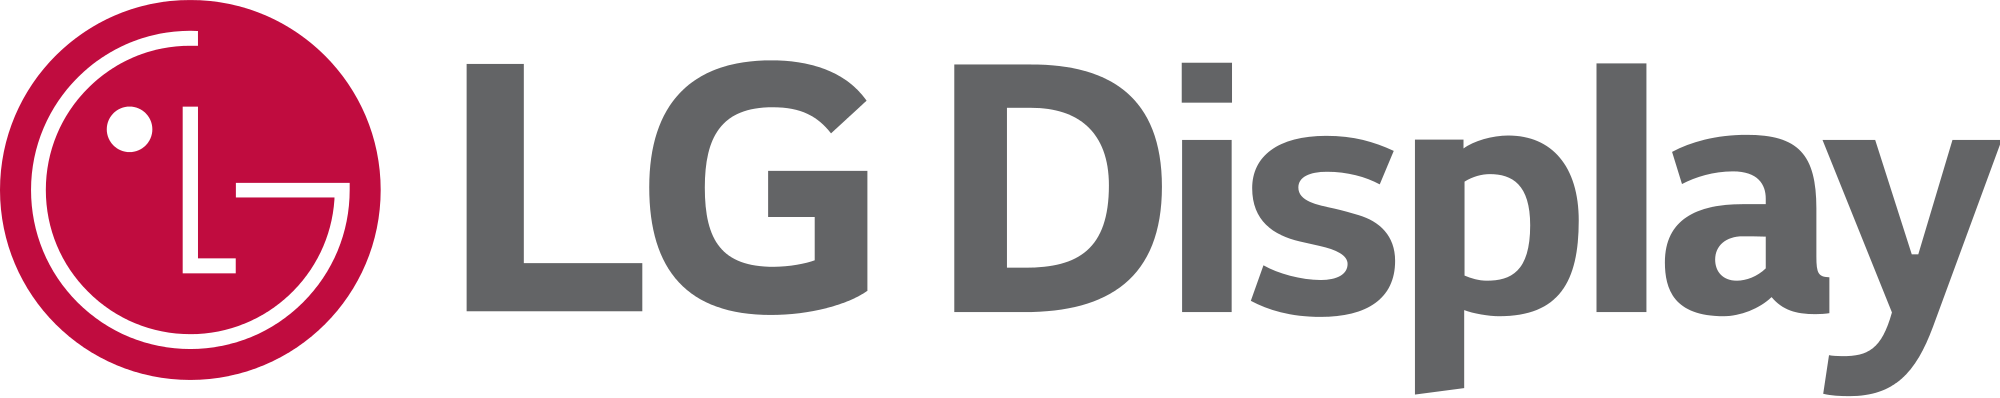 LG Display Brand Logo